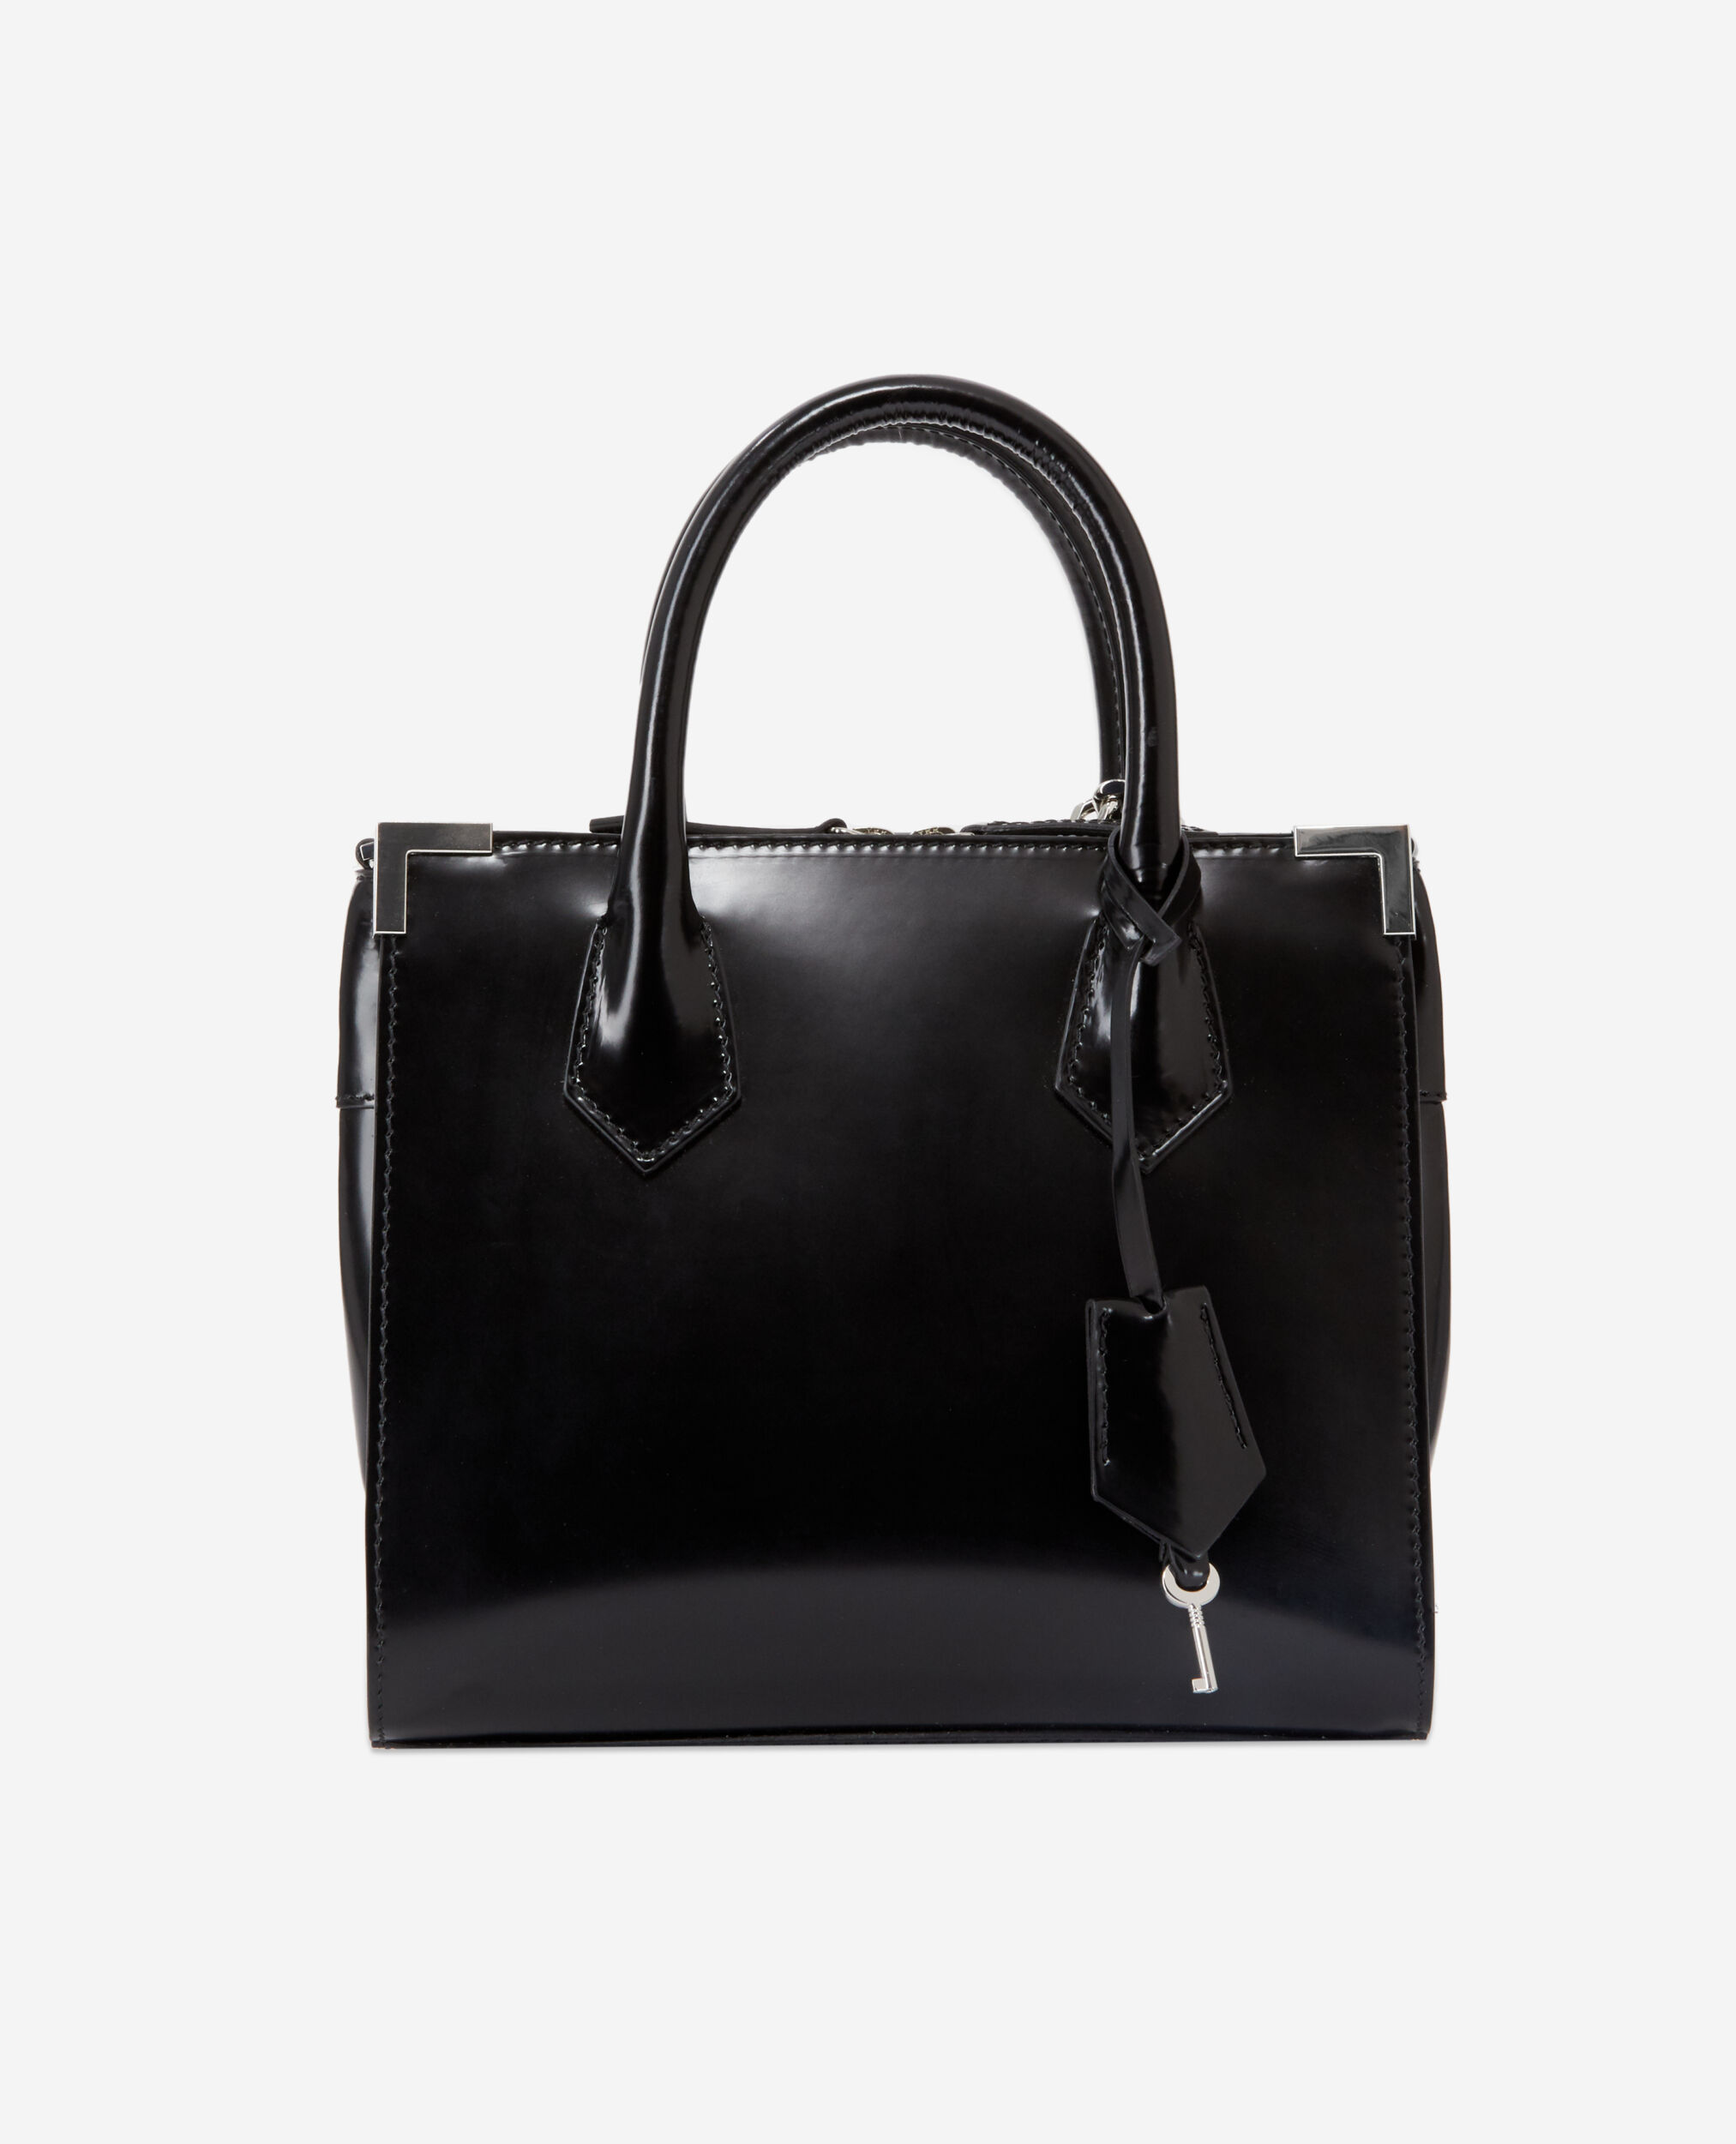 Medium Ming bag in black patent leather, BLACK, hi-res image number null